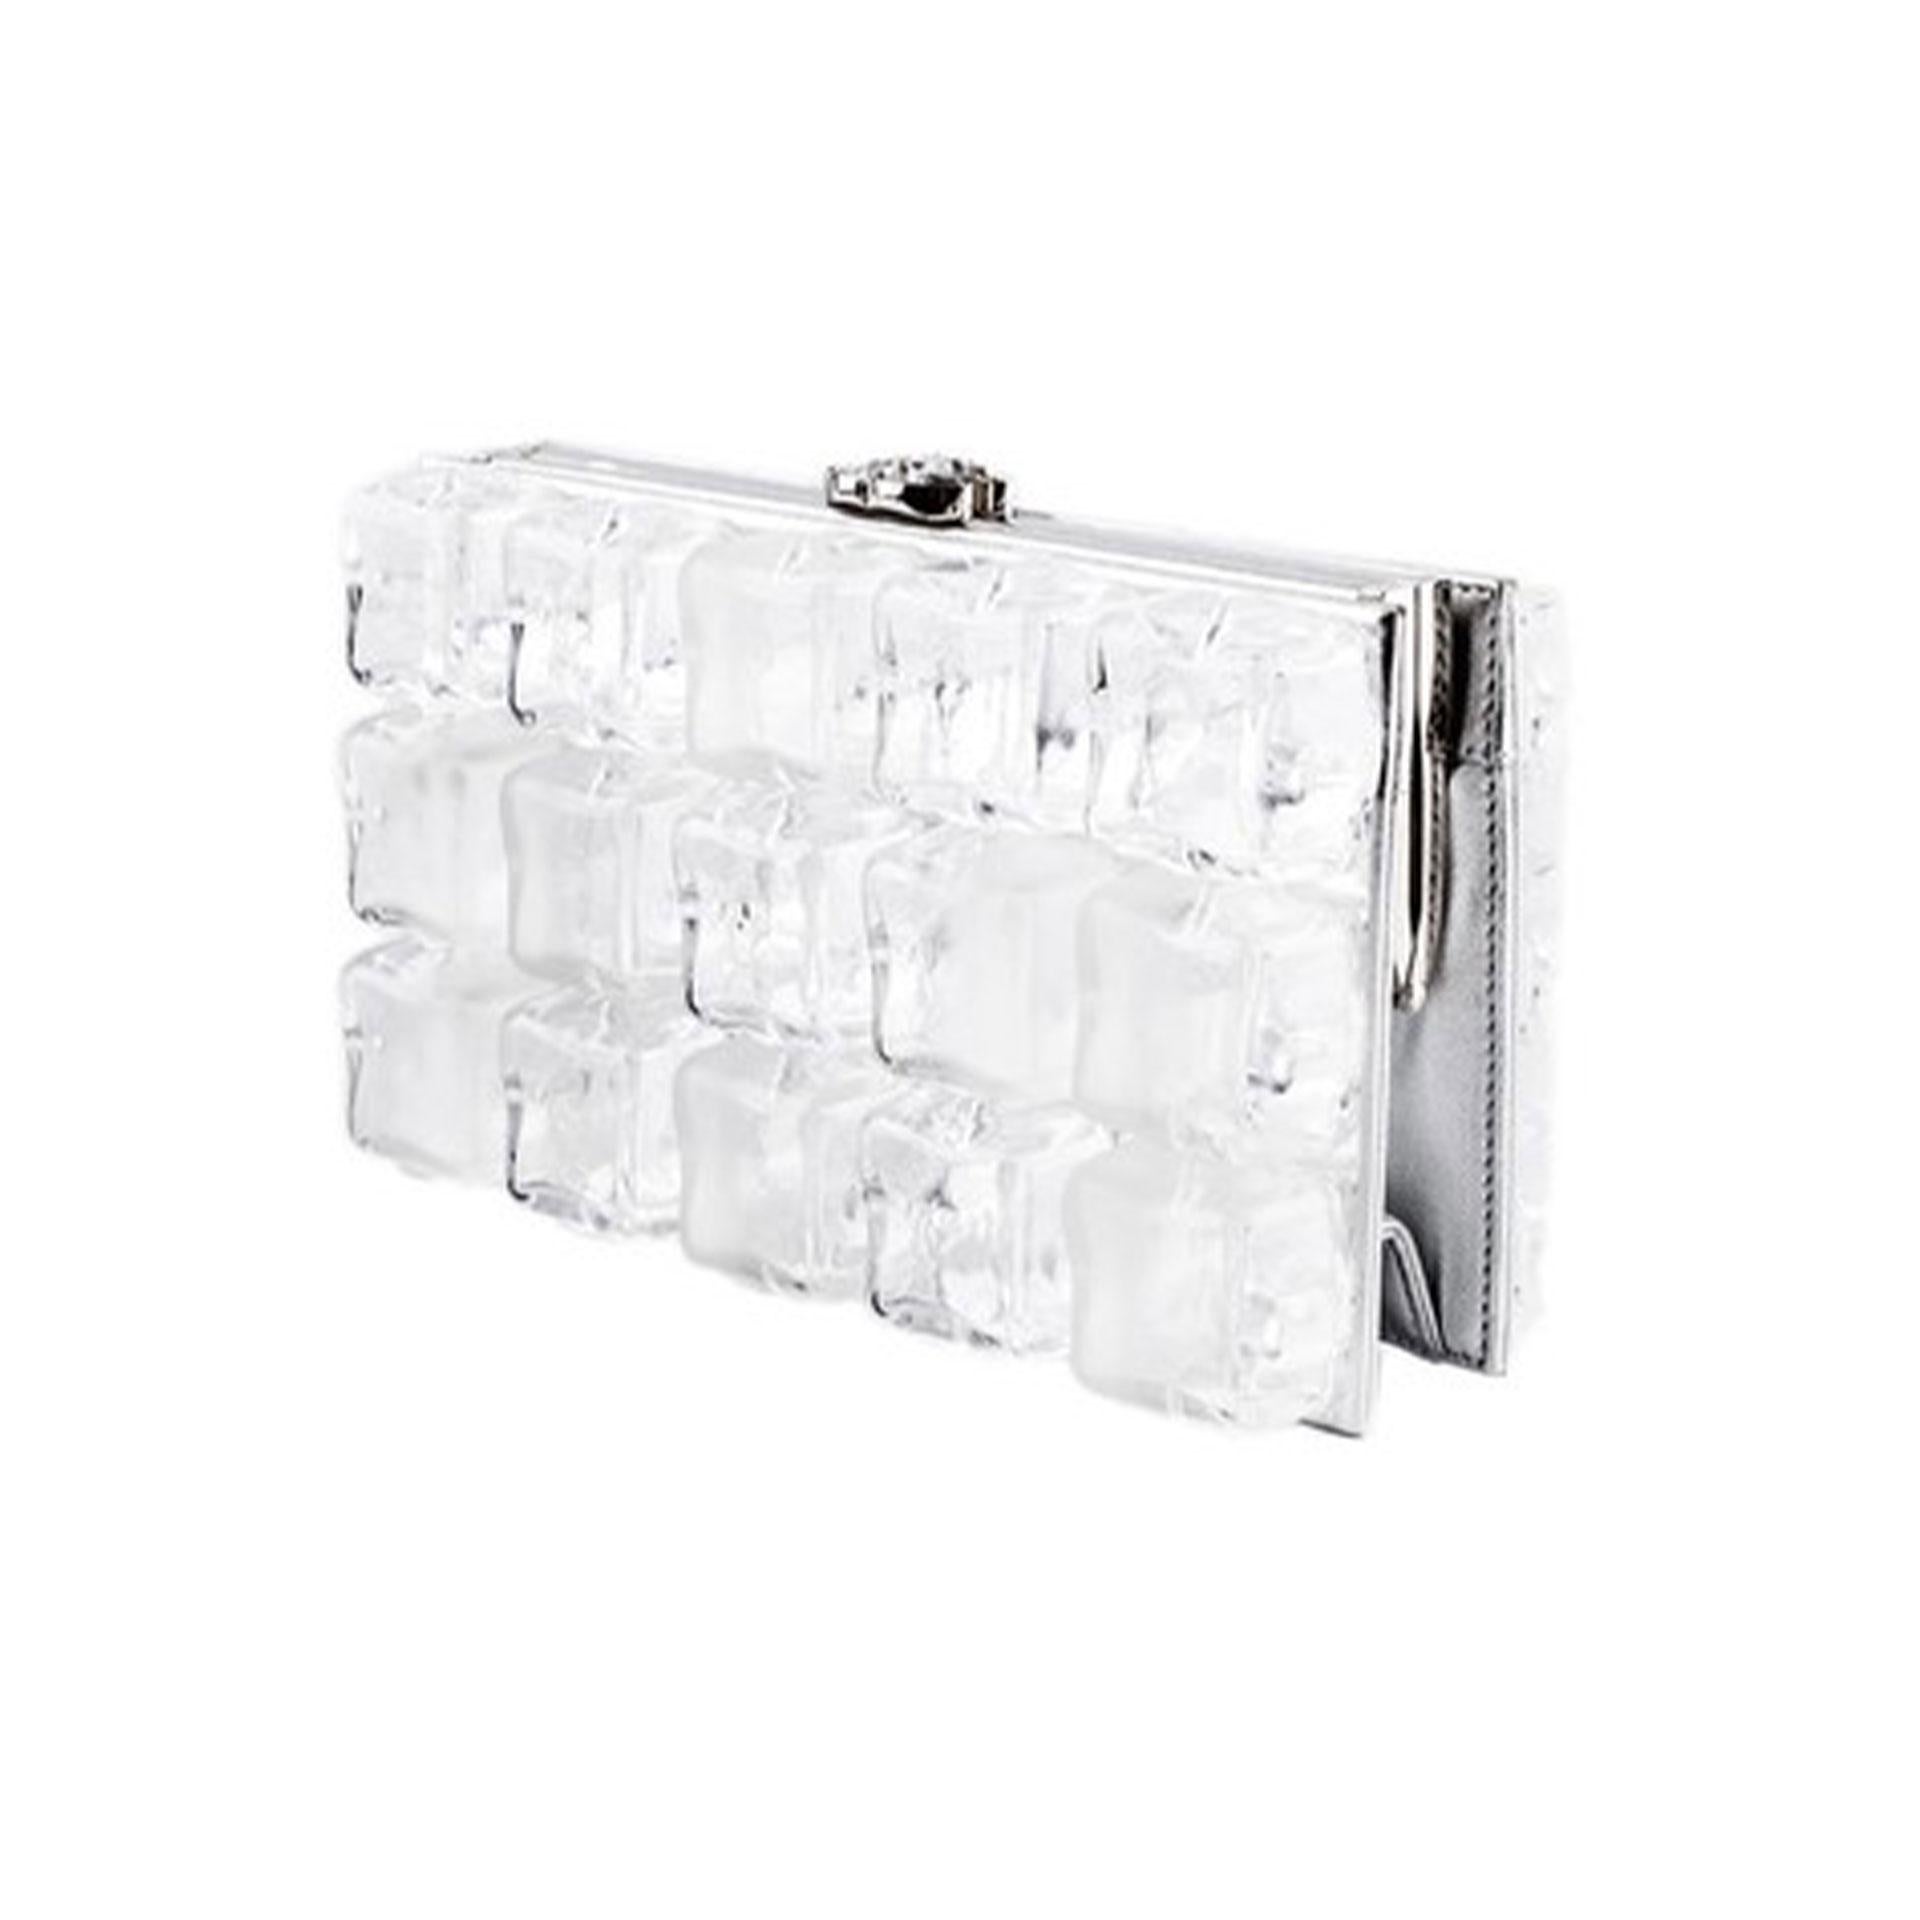 Women's or Men's Chanel Rare Limited Edition Ice Cube Minaudière Silver Plexiglass Clutch